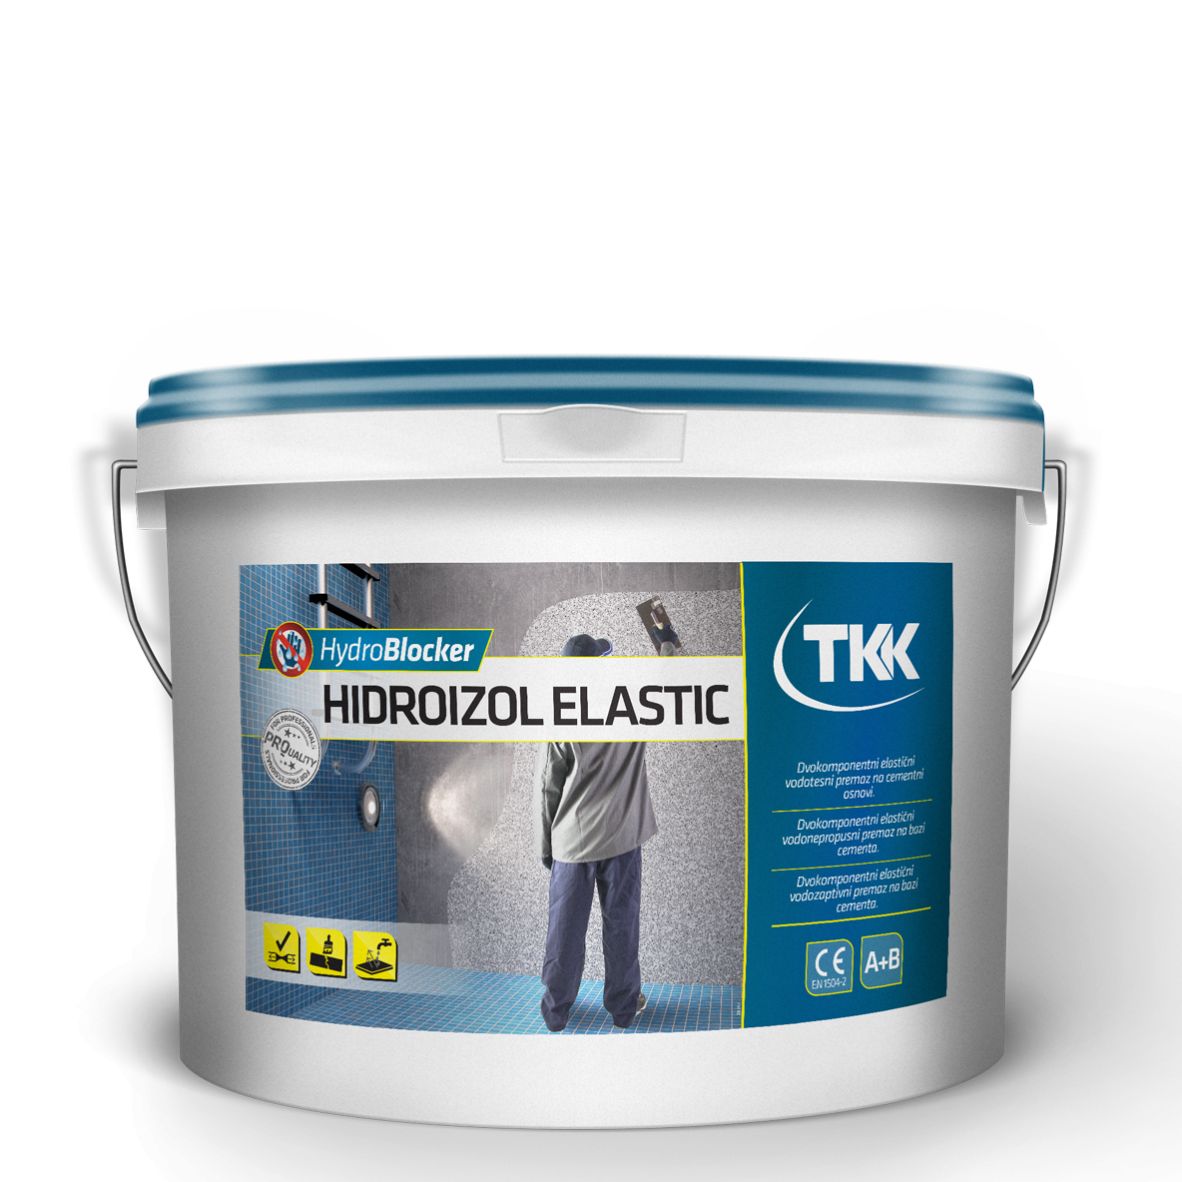 Hydroblocker hidroizol elastic 81kg